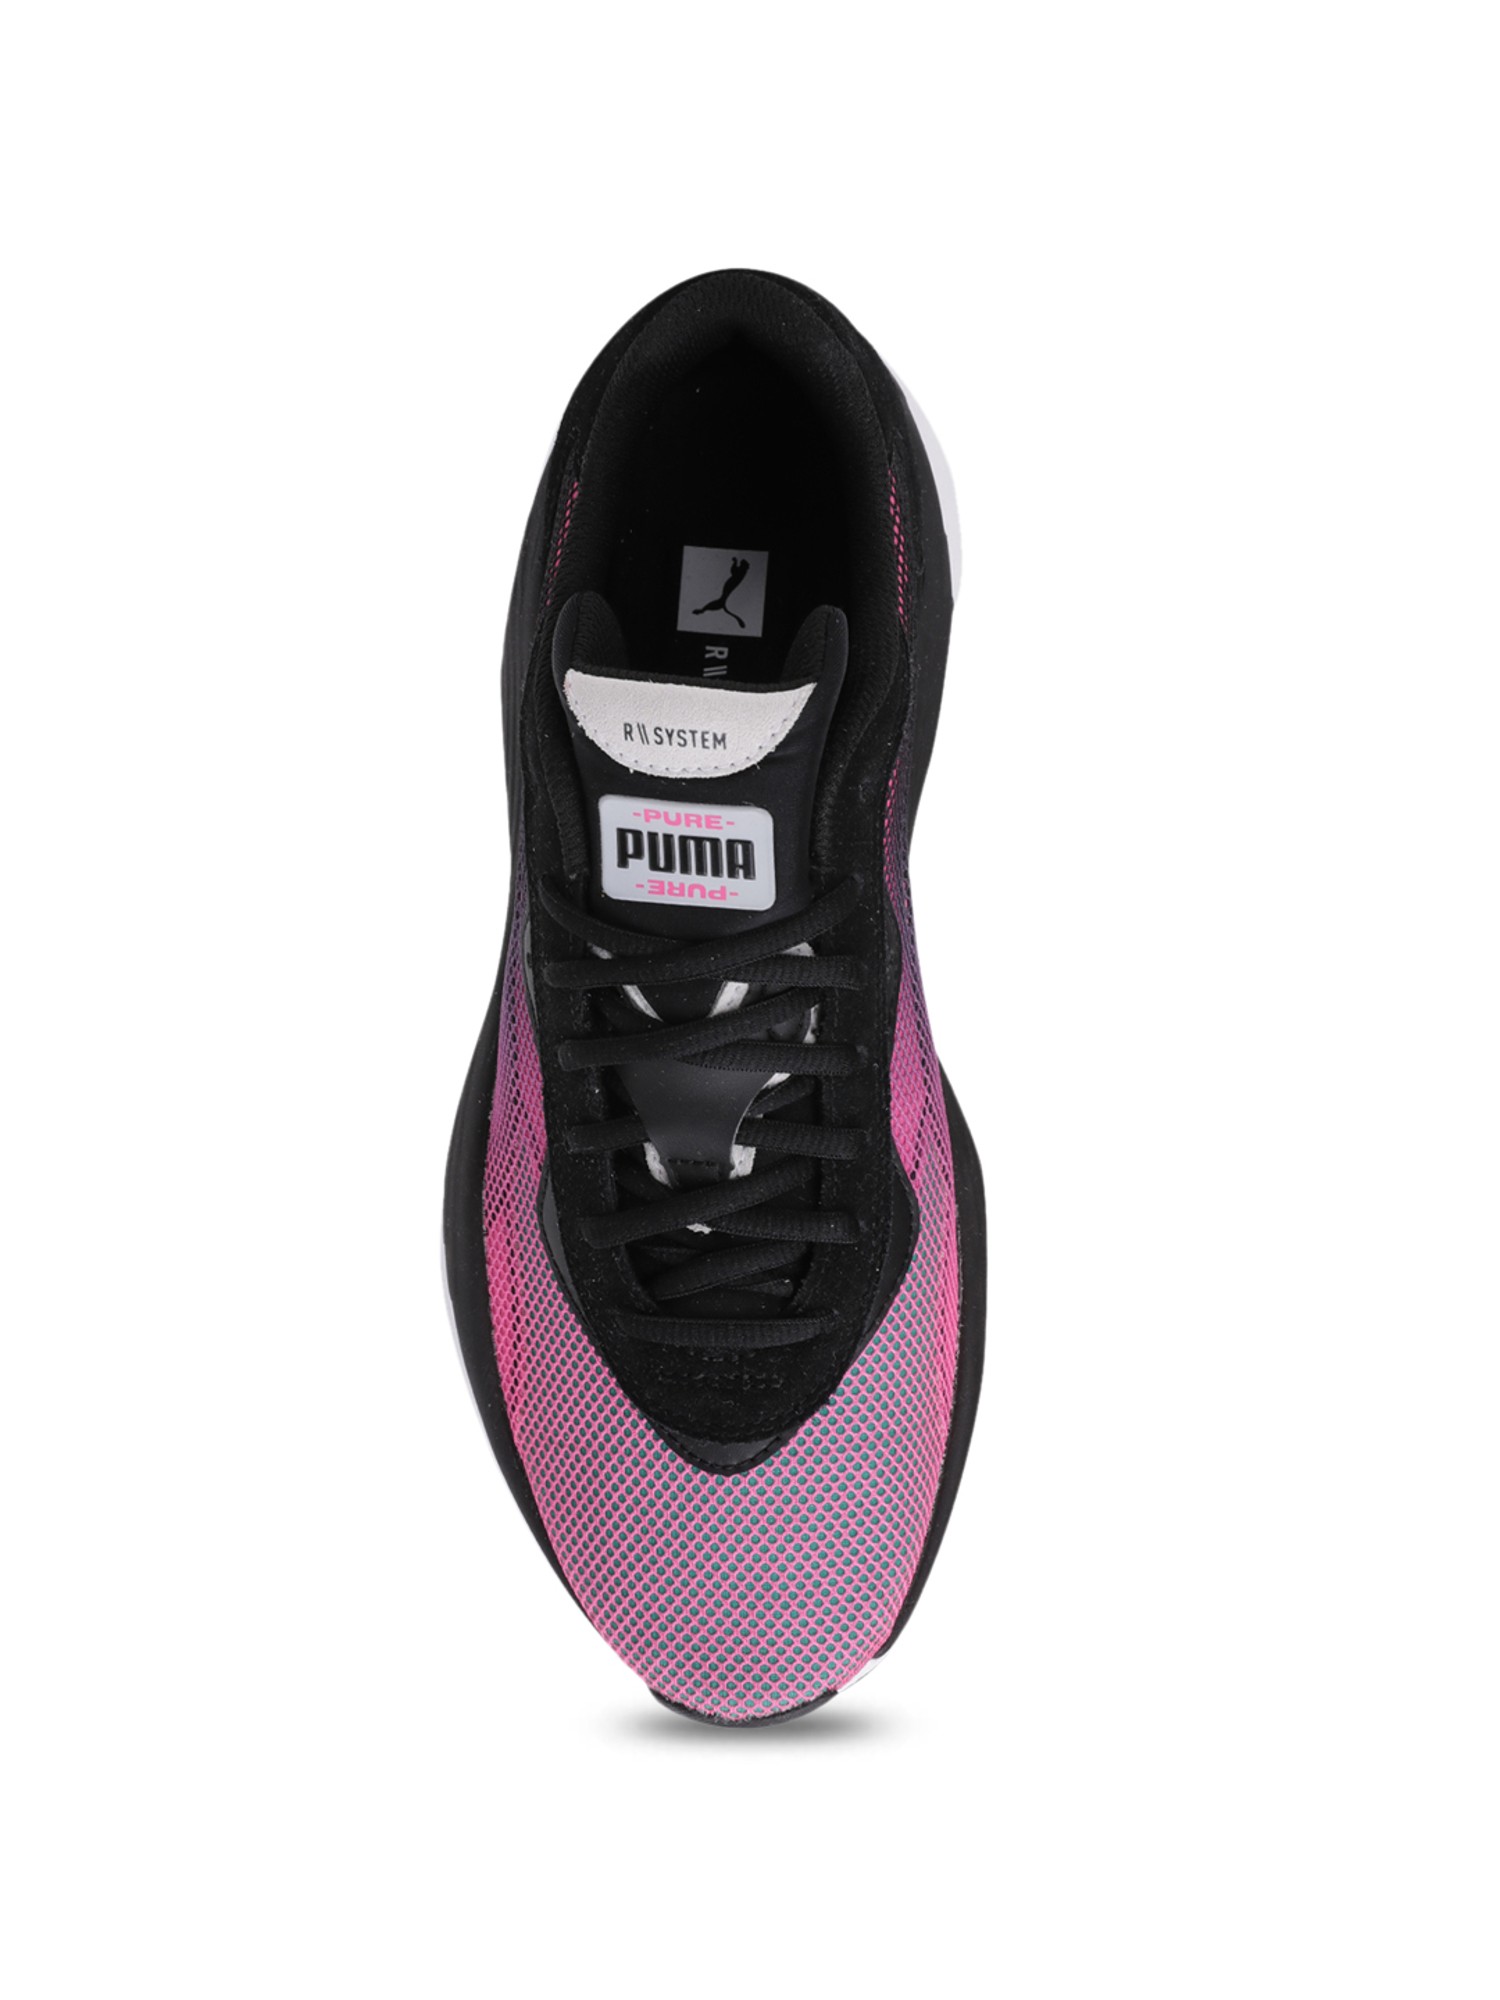 puma pink fluorescent shoes